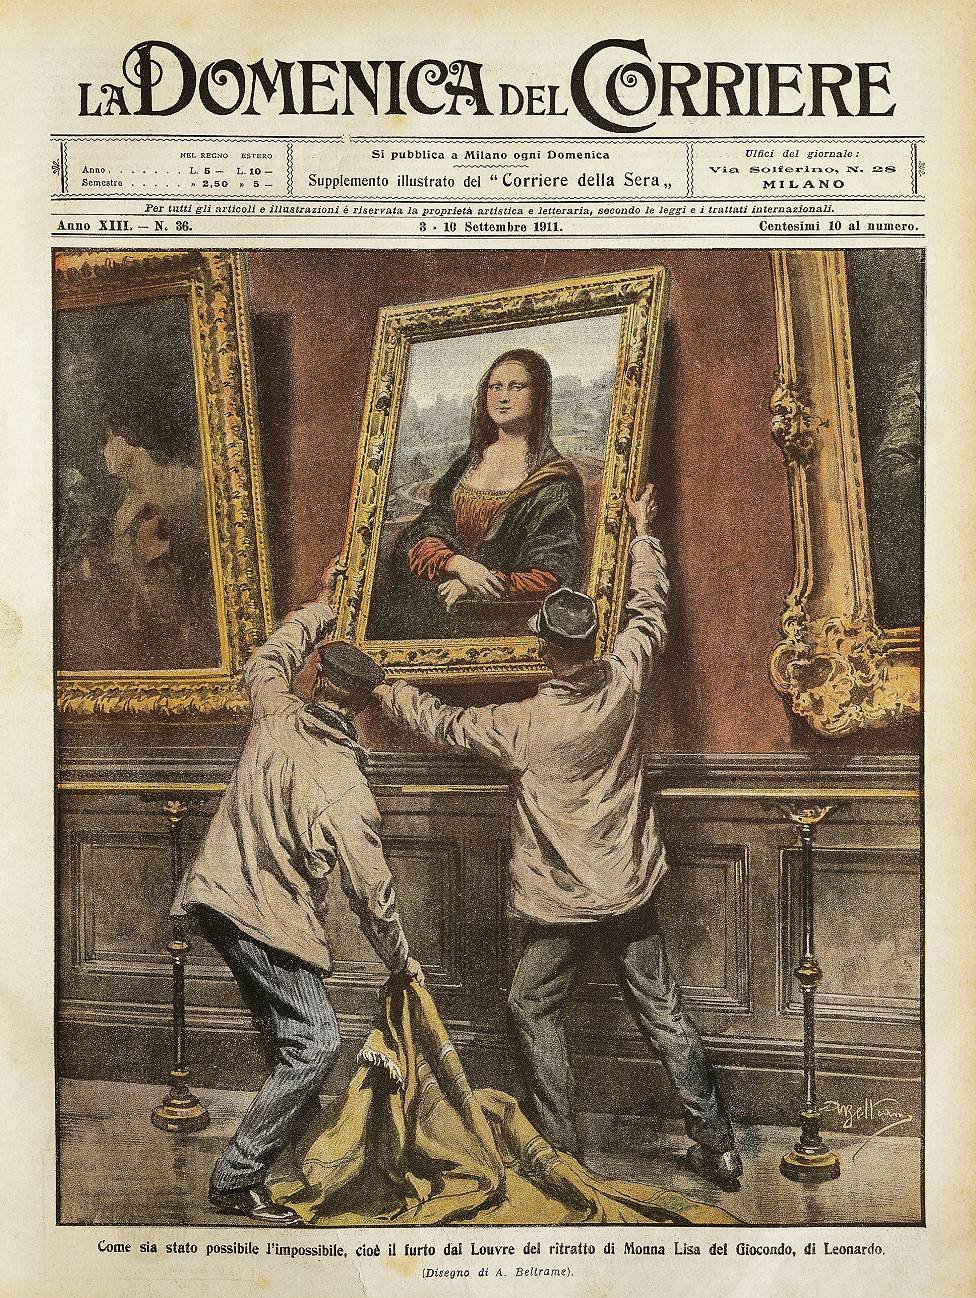 Robo de la Mona Lisa. Illustrator Achille Beltrame (1871-1945), de La Domenica del Corriere, del 3 al 10 de septiembre de 1911.